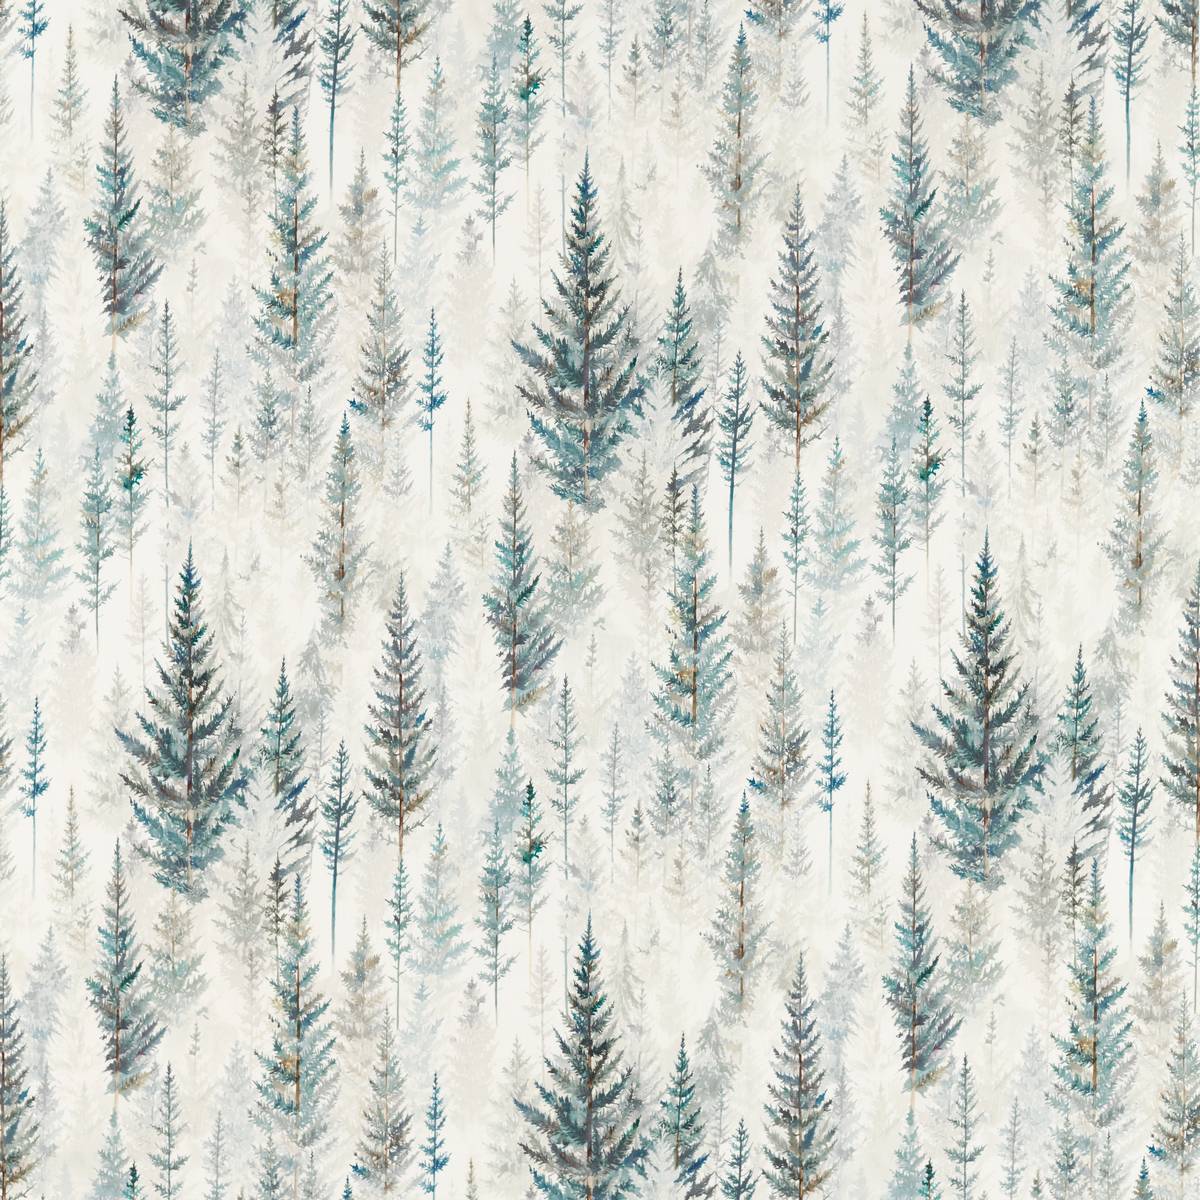 Juniper Pine Forest Fabric by Sanderson